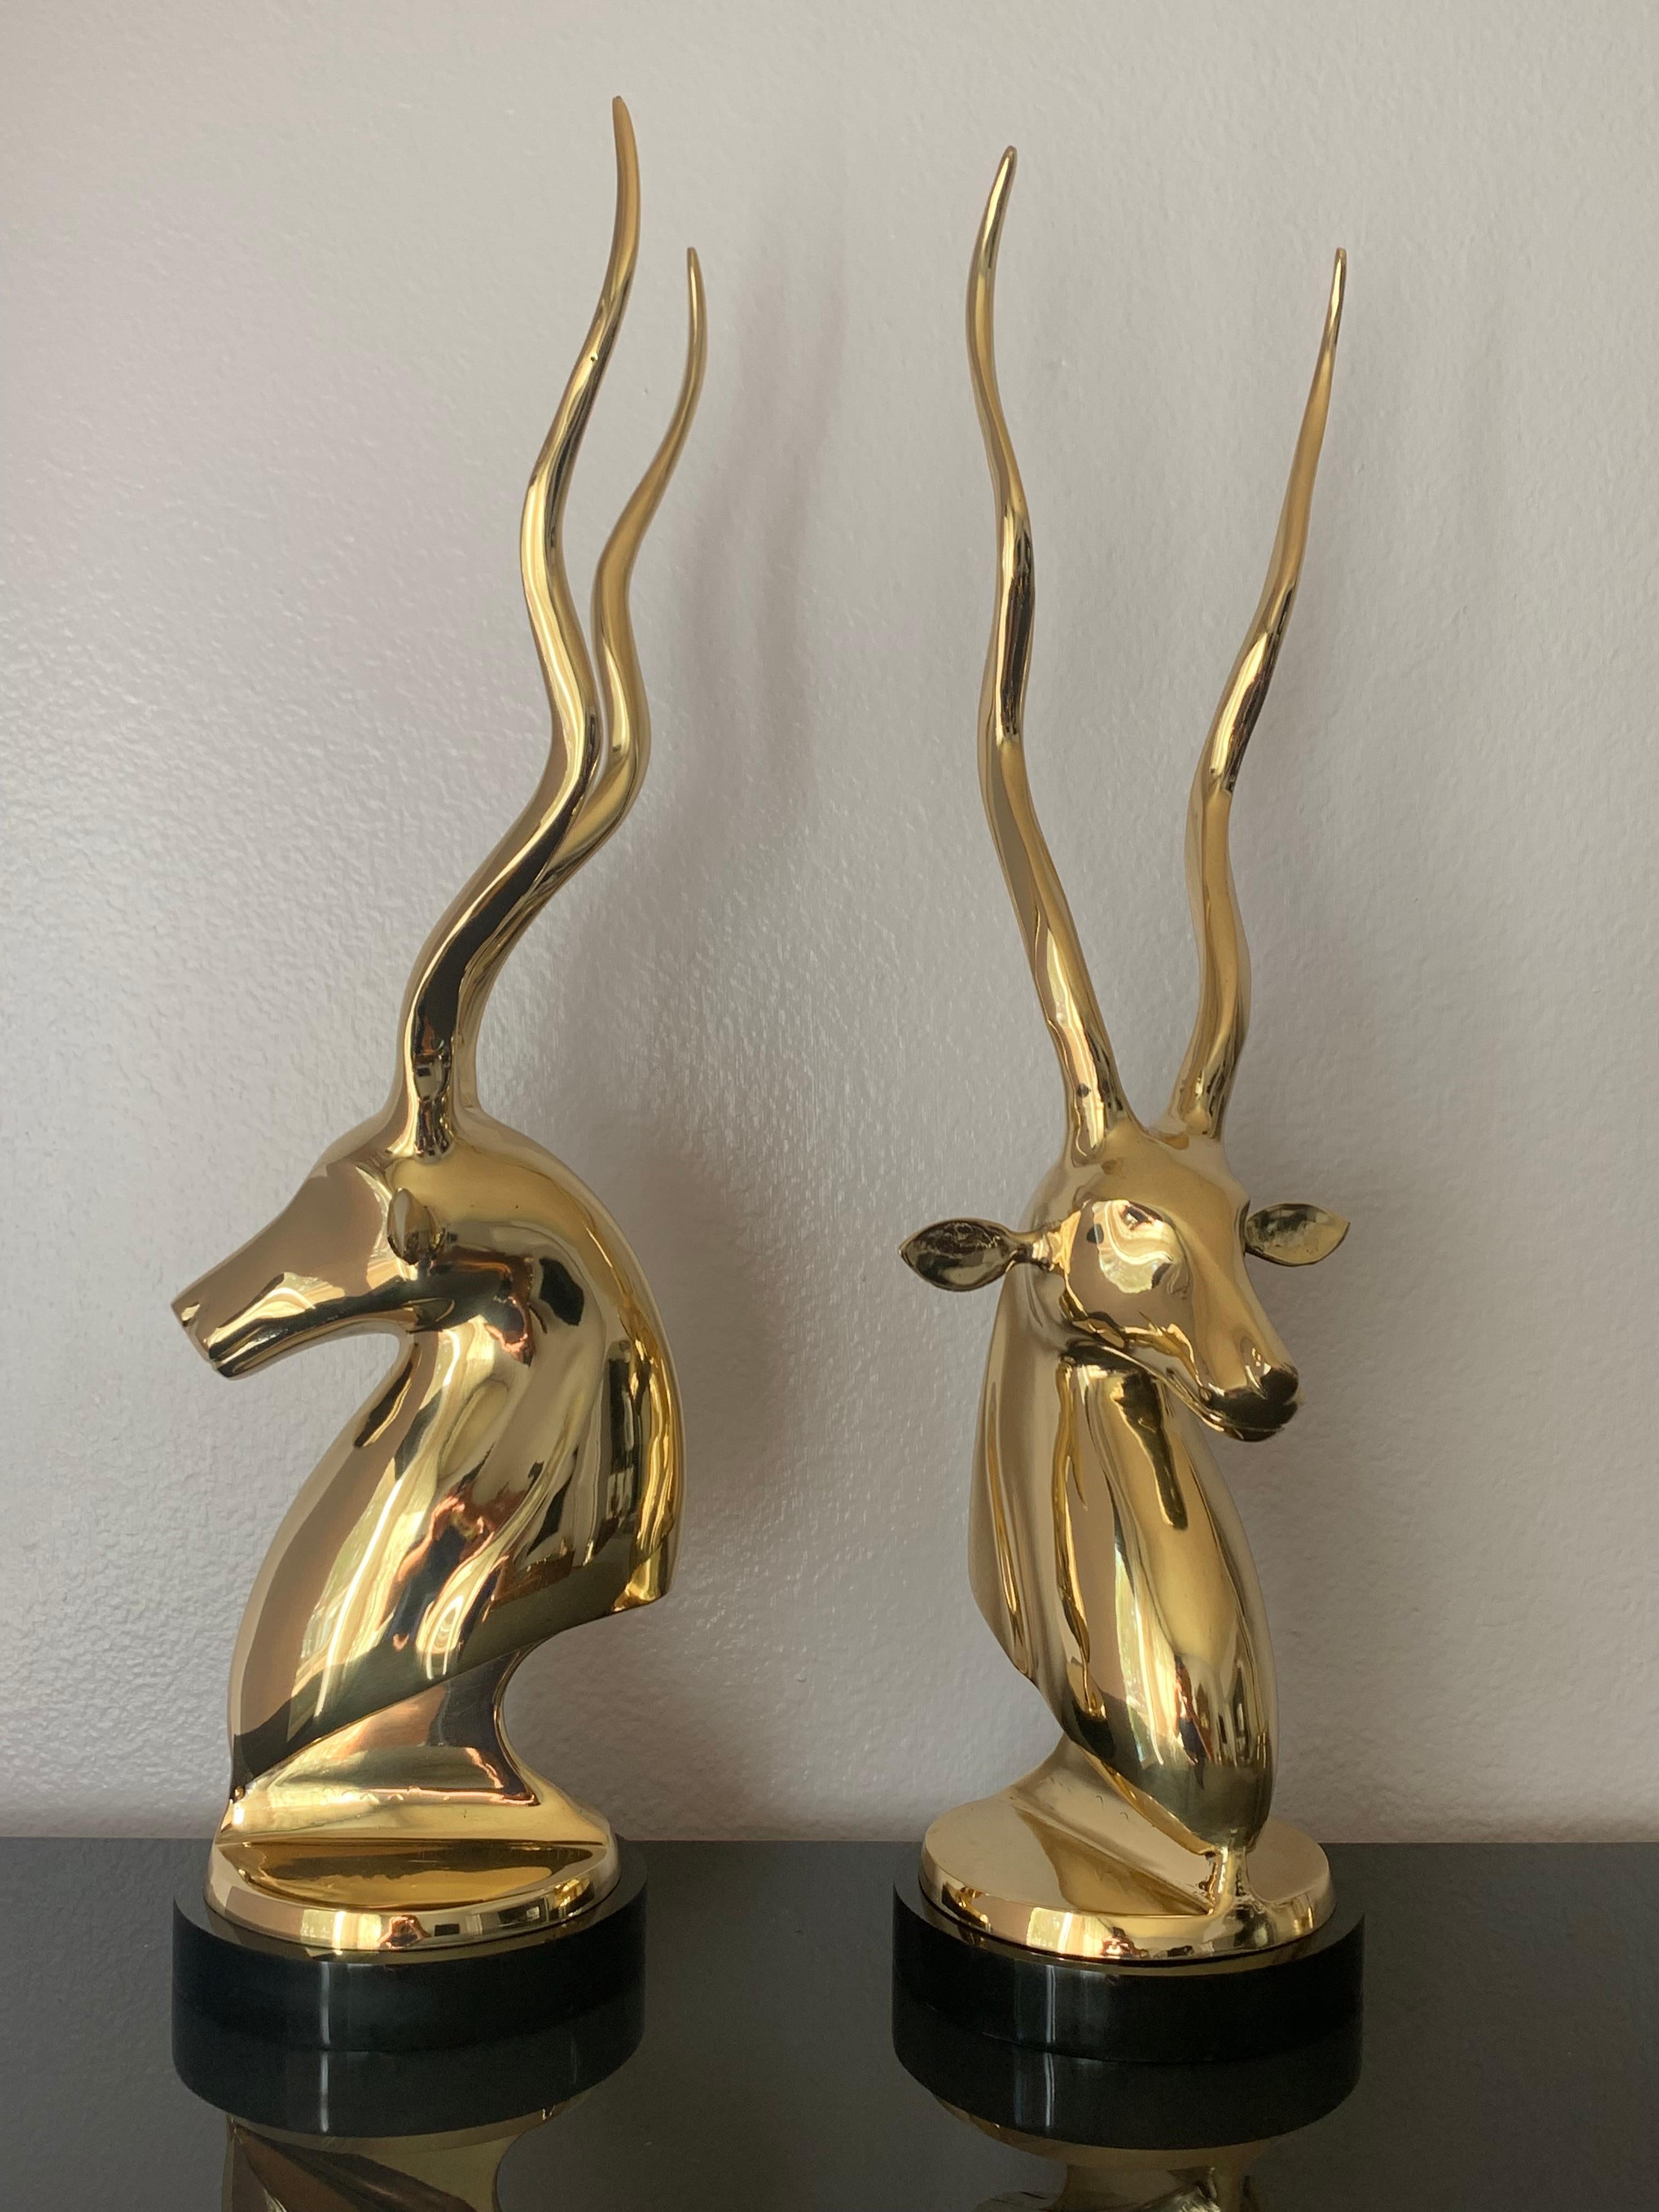 Pair of brass kudu or antelope busts on black acrylic base.